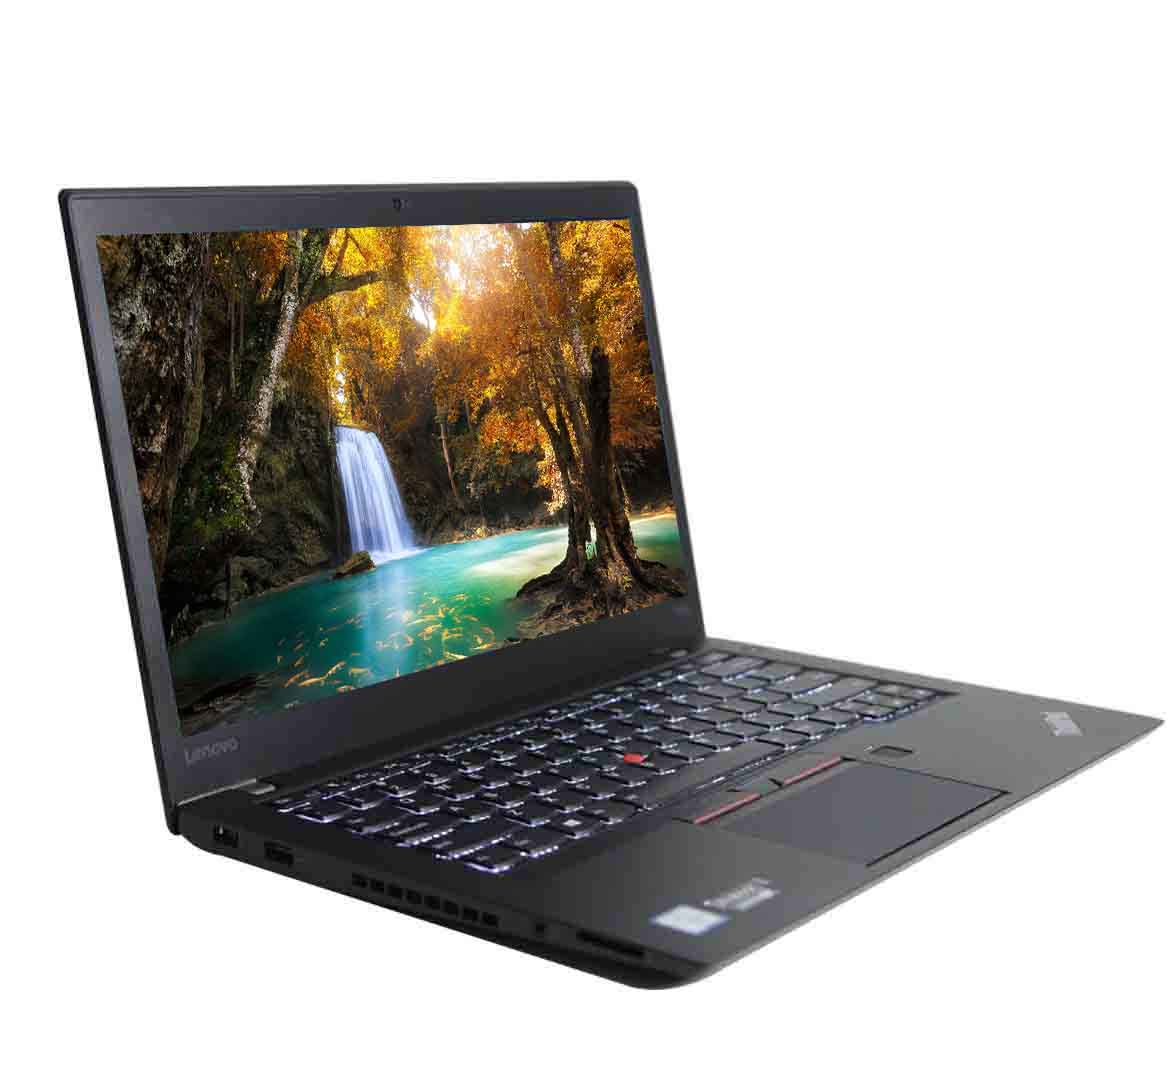 Lenovo ThinkPad T460 Business Laptop, Intel Core i7-6th Gen CPU, 8GB  RAM, 256GB SSD, 14.1 inch Display, Windows 10 Pro